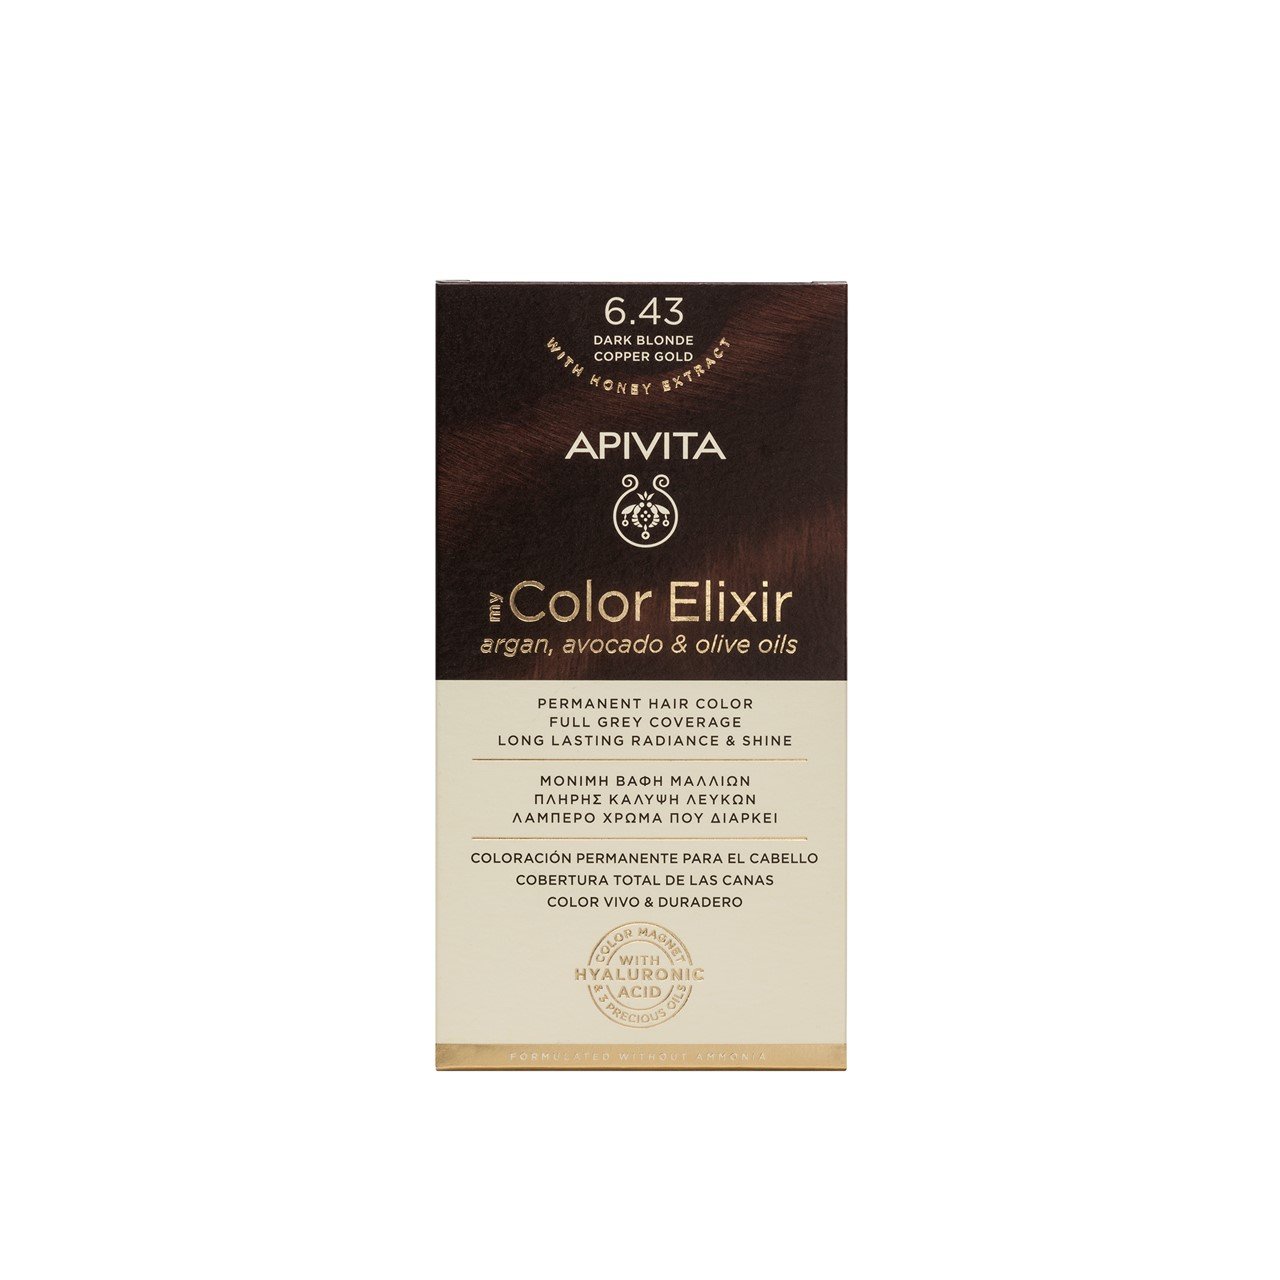 APIVITA My Color Elixir 6.43 Permanent Hair Color